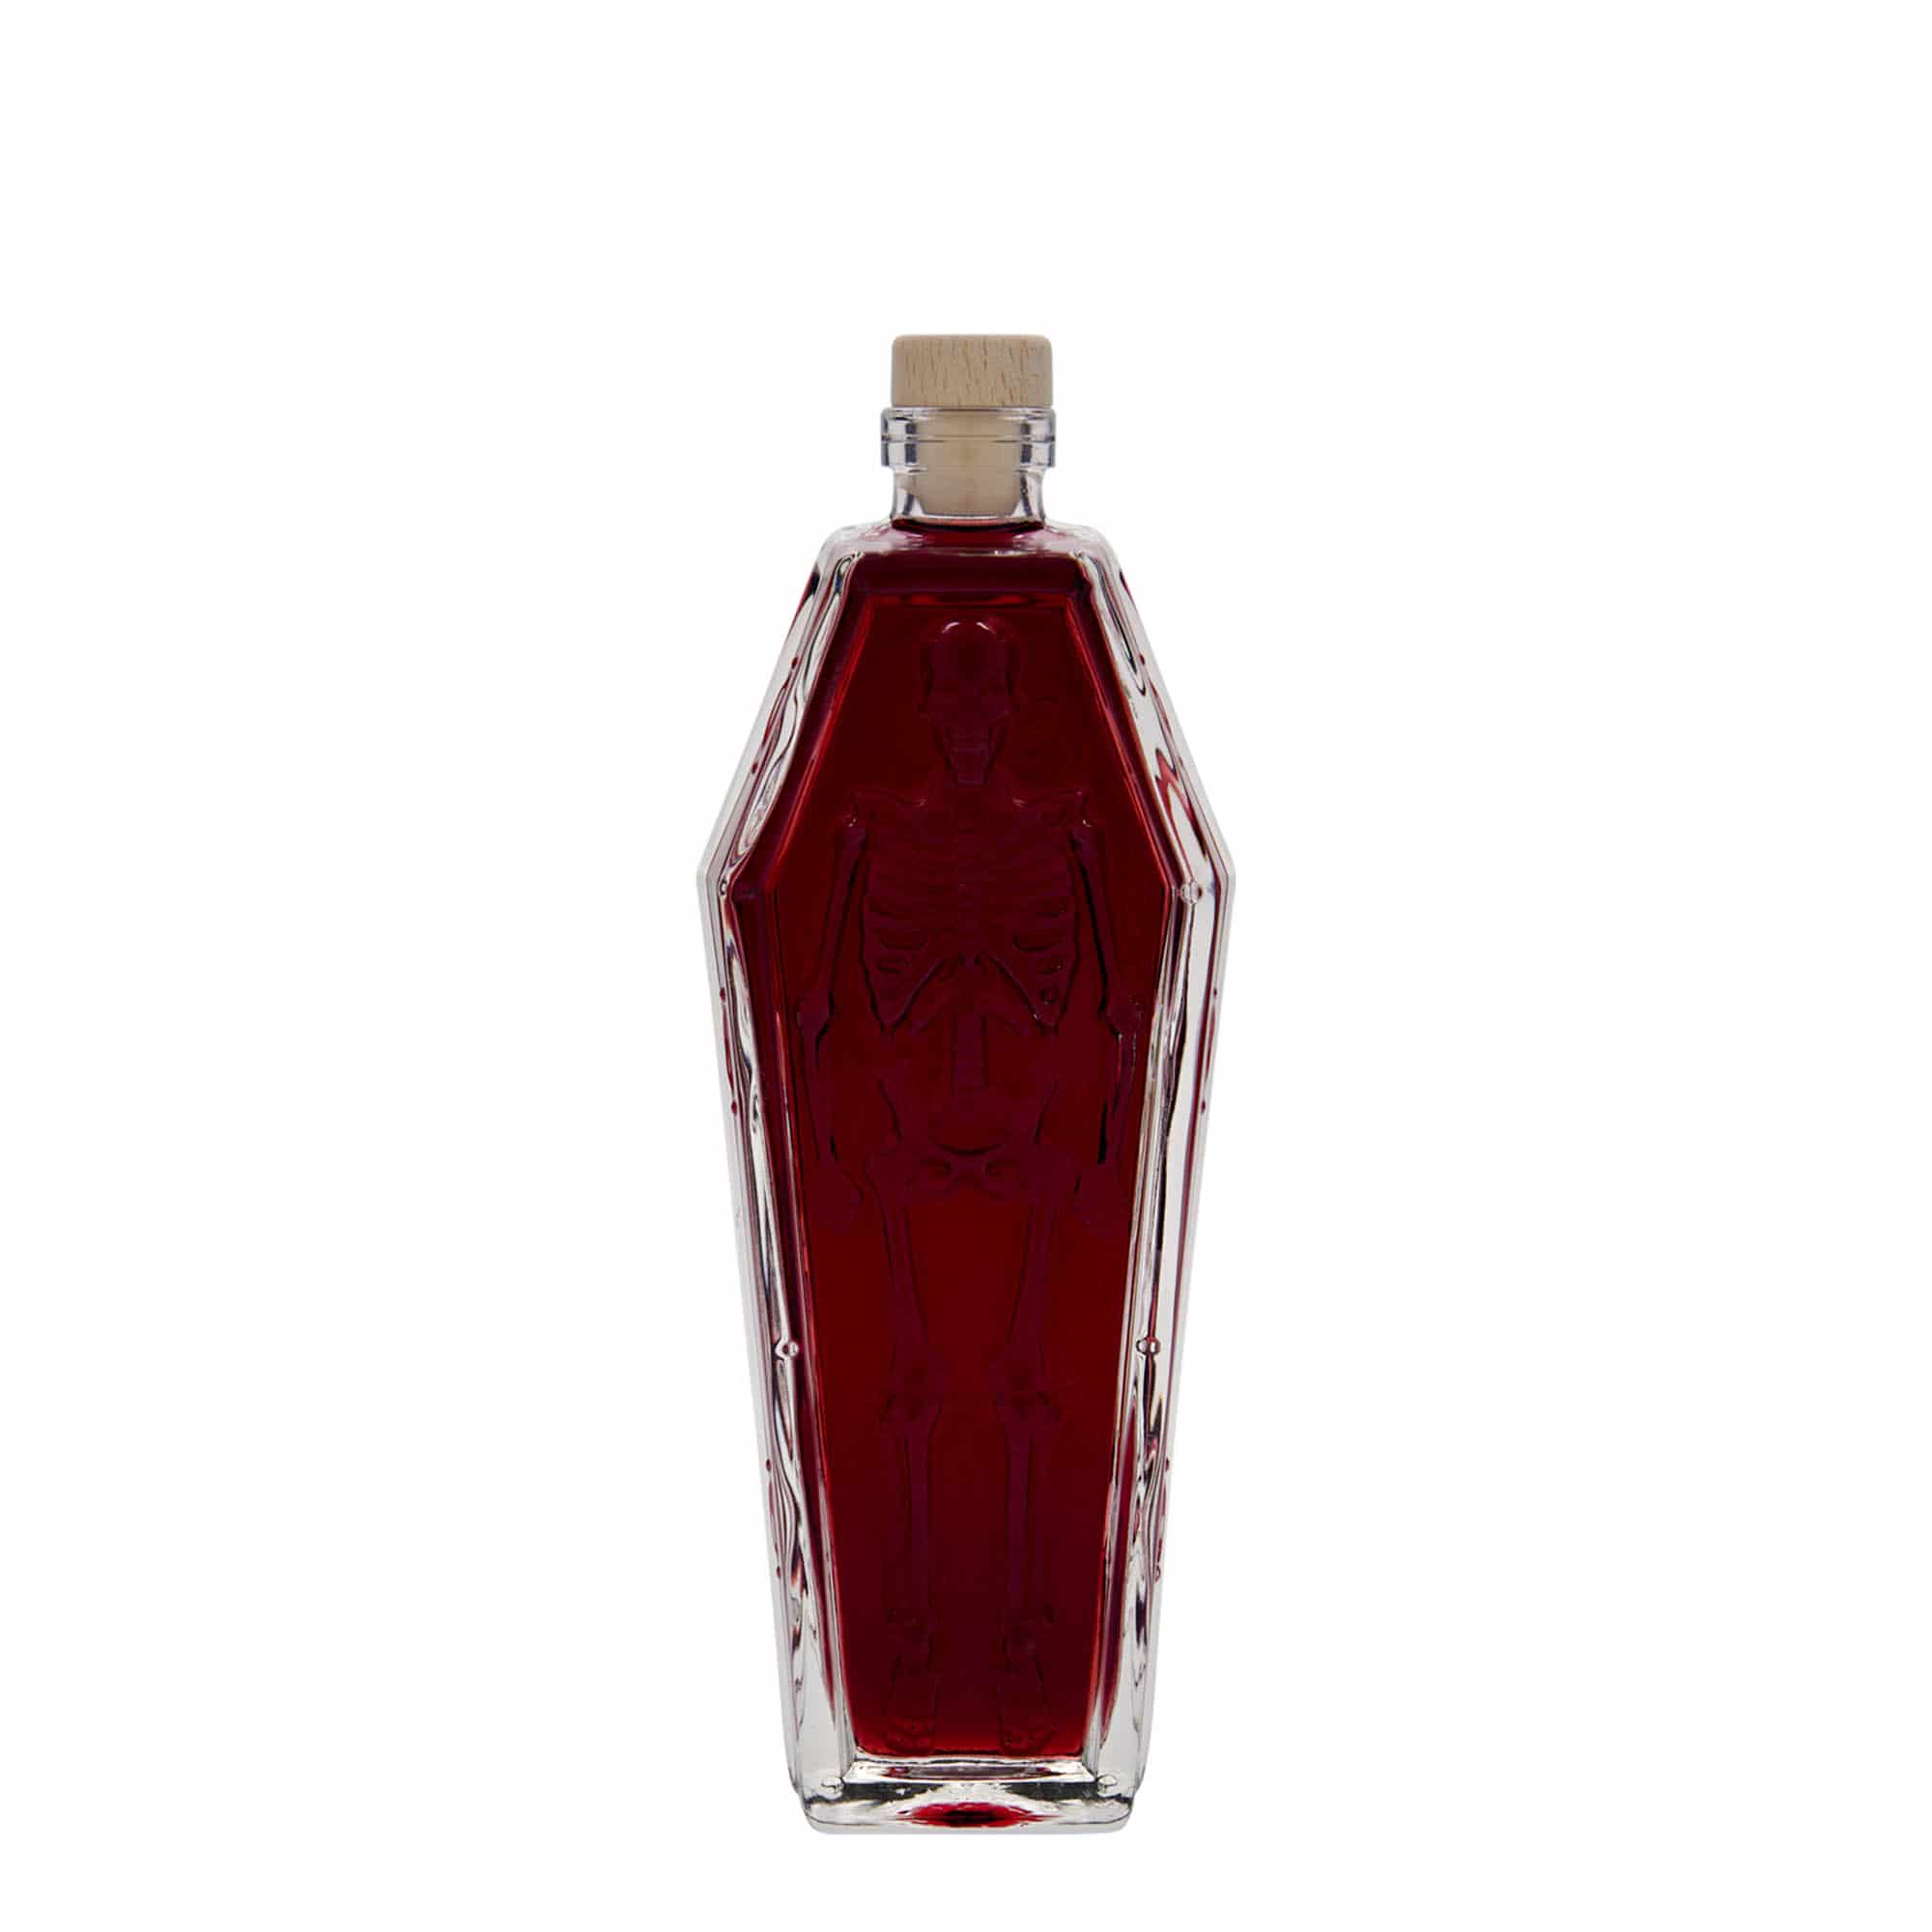 200 ml glass bottle 'Sarg', closure: cork